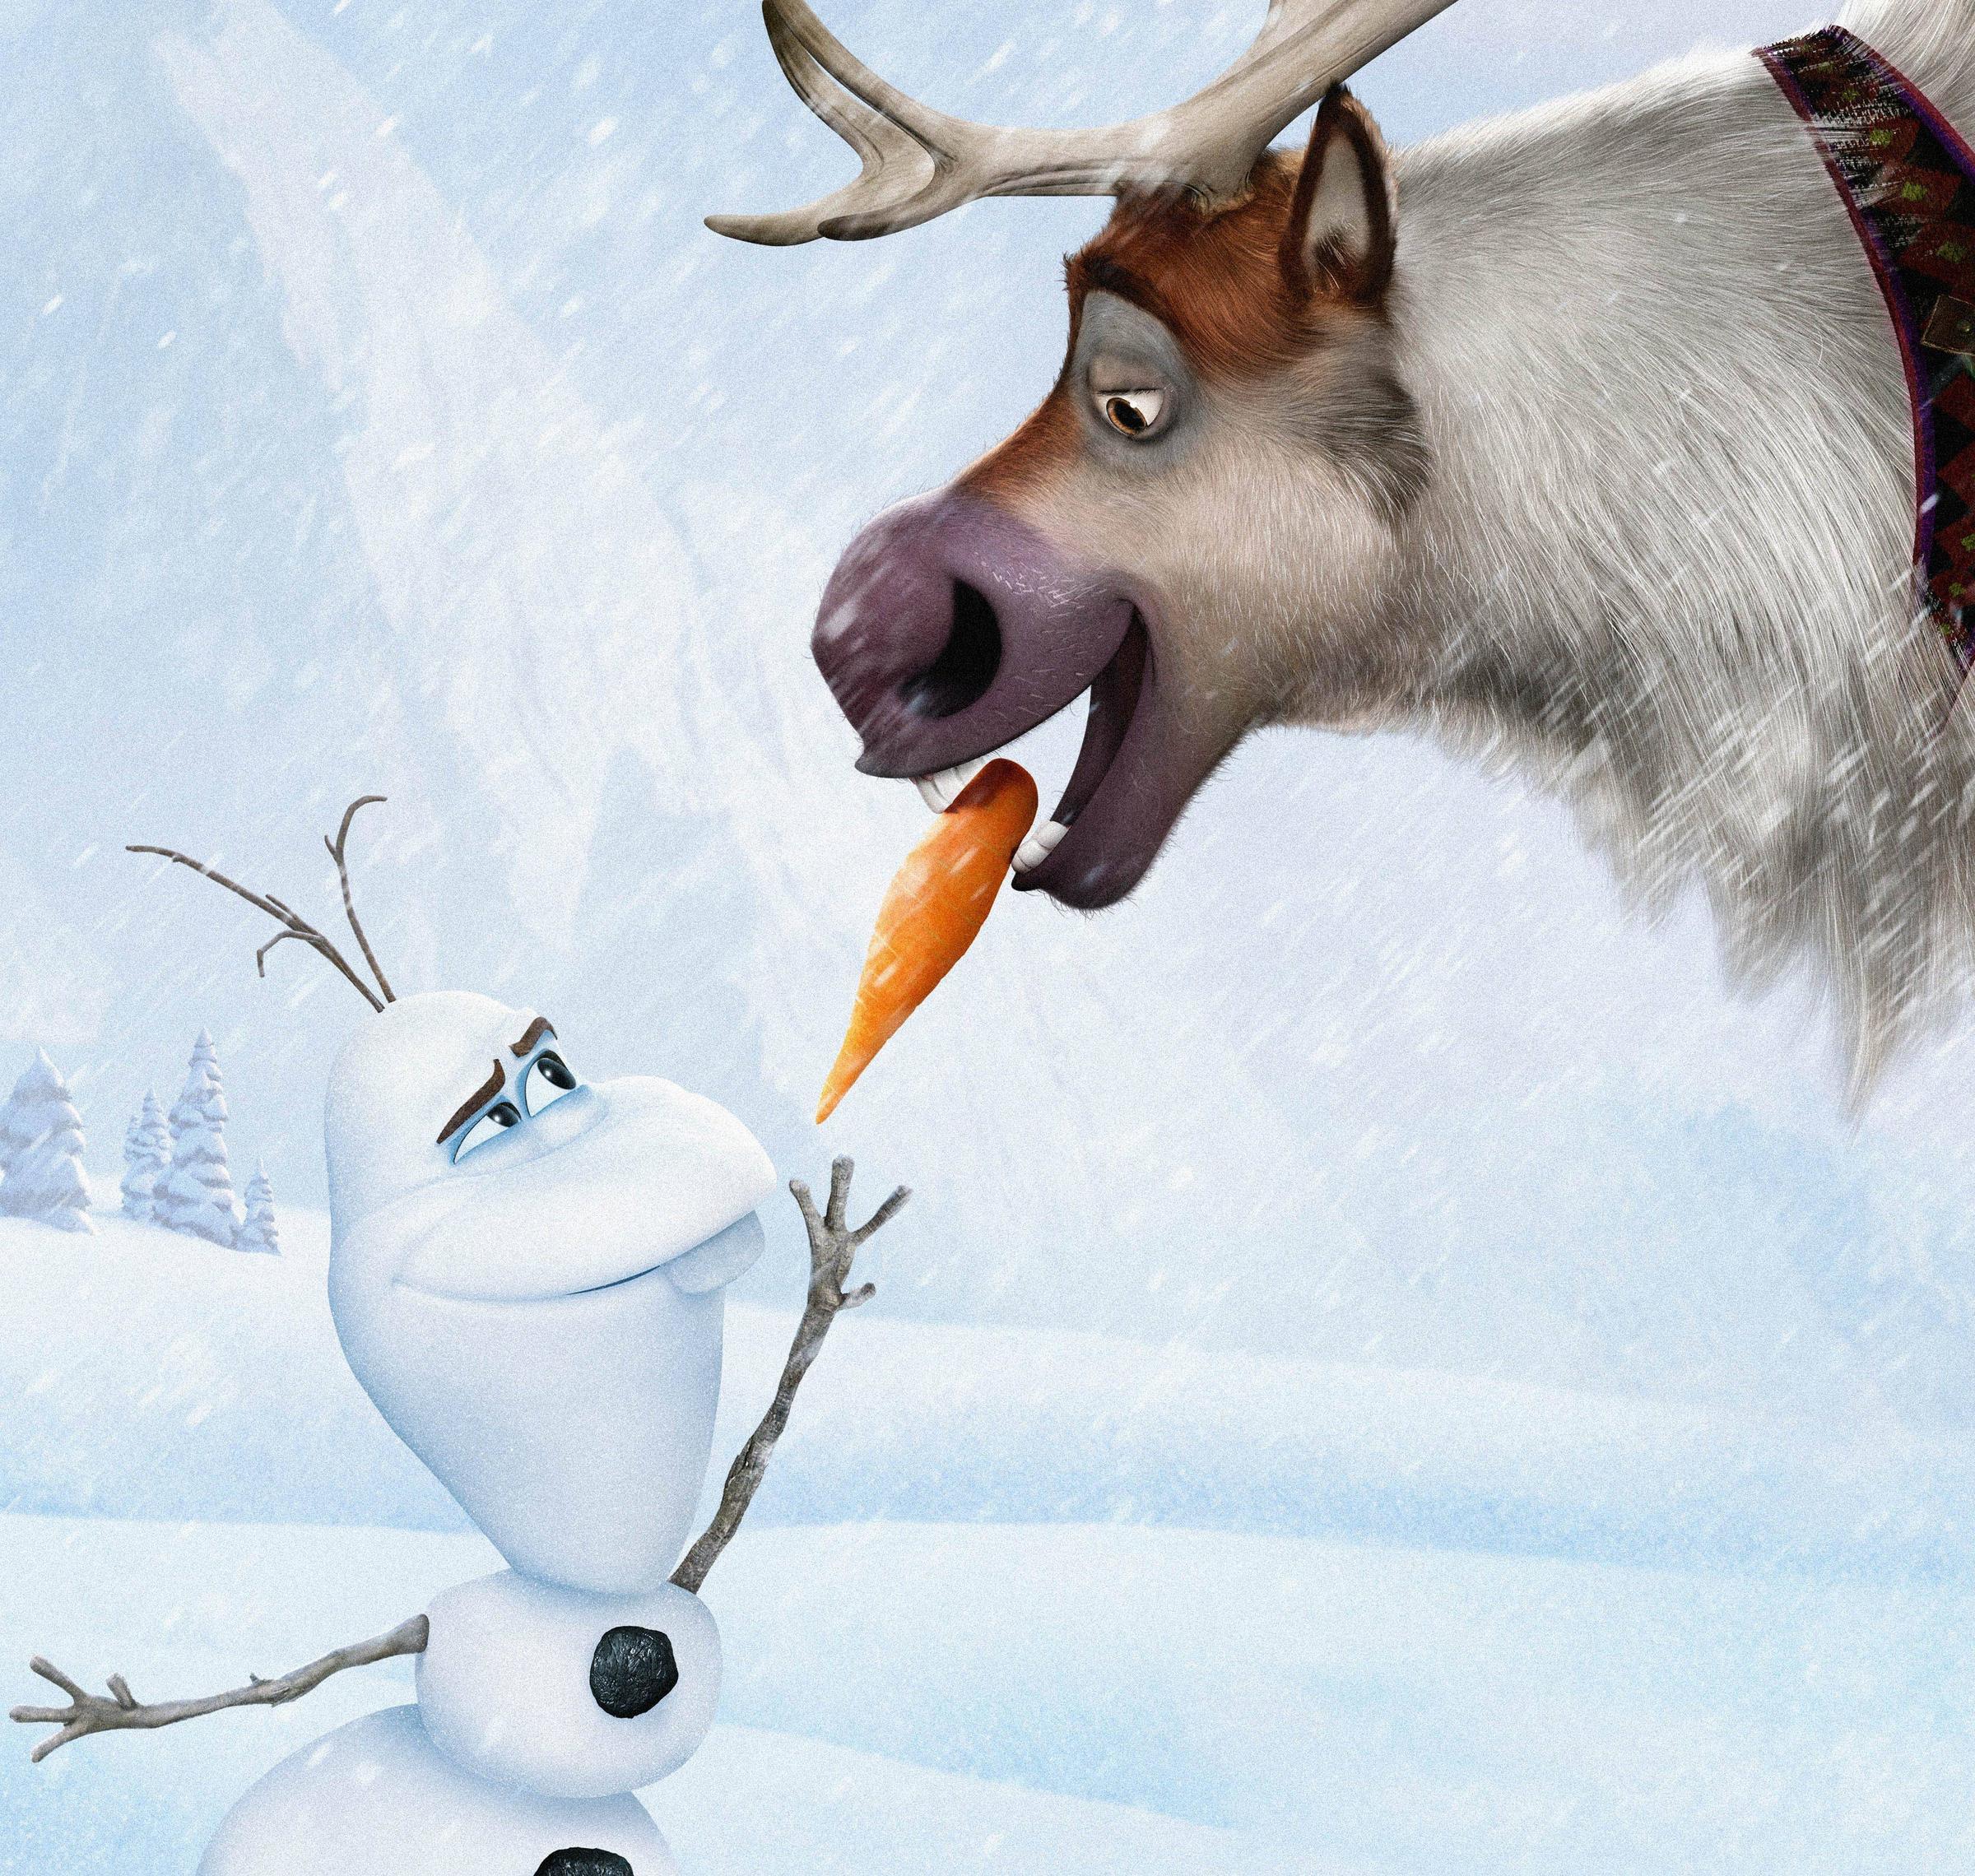 Olaf Frozen Download Wallpaper Desktop, Widescreen and Mobile